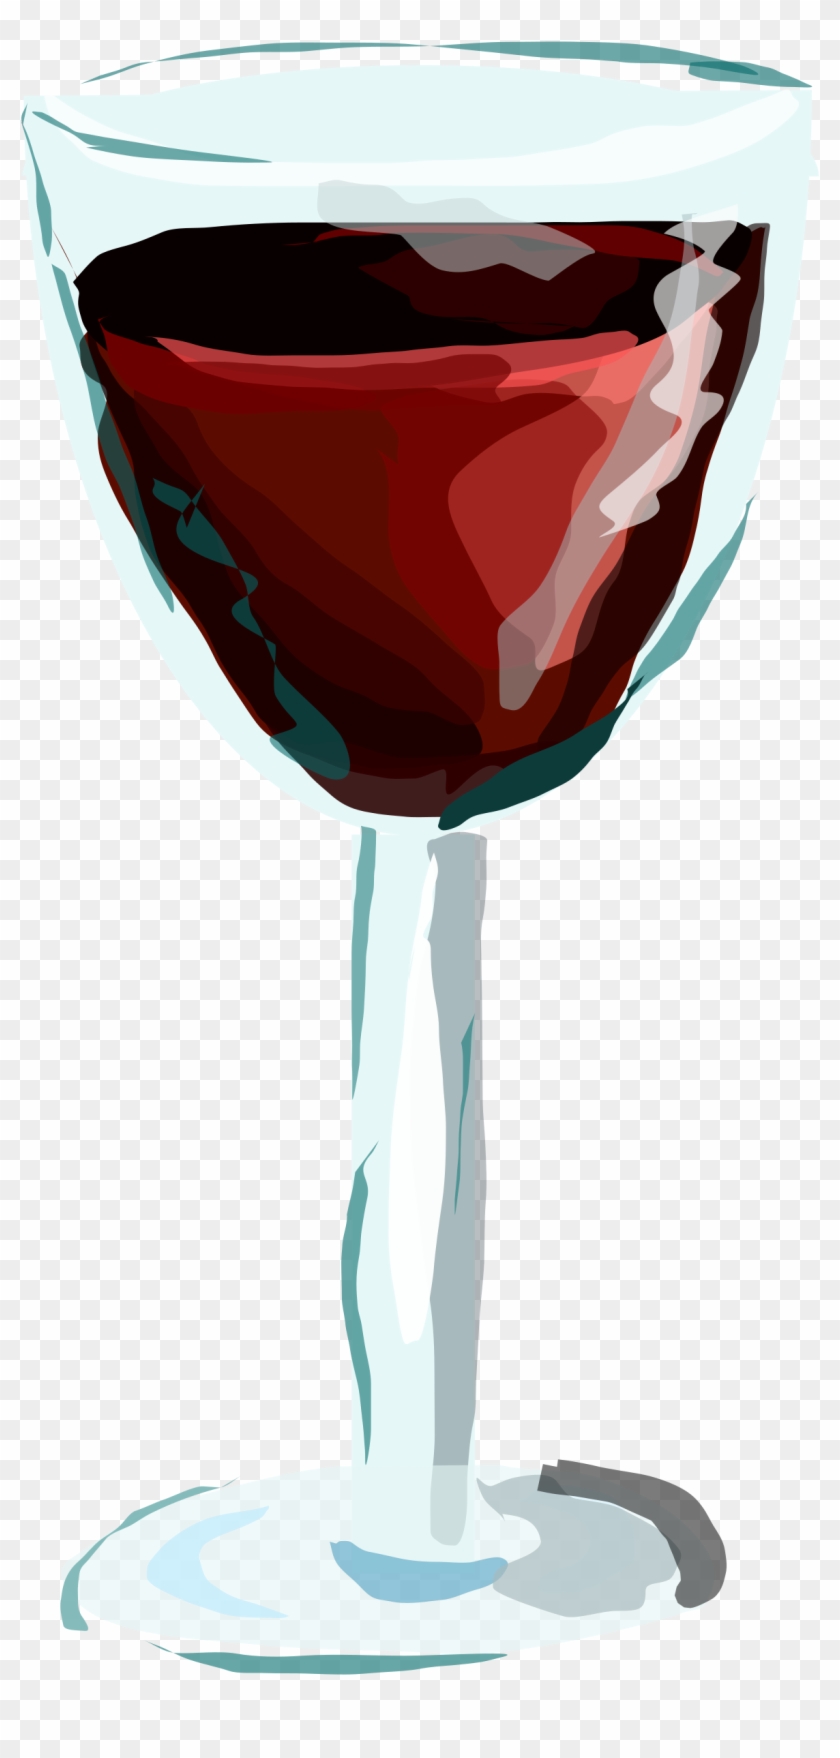 Red Wine Glass Clipart - Wine Glass Clip Art #388600